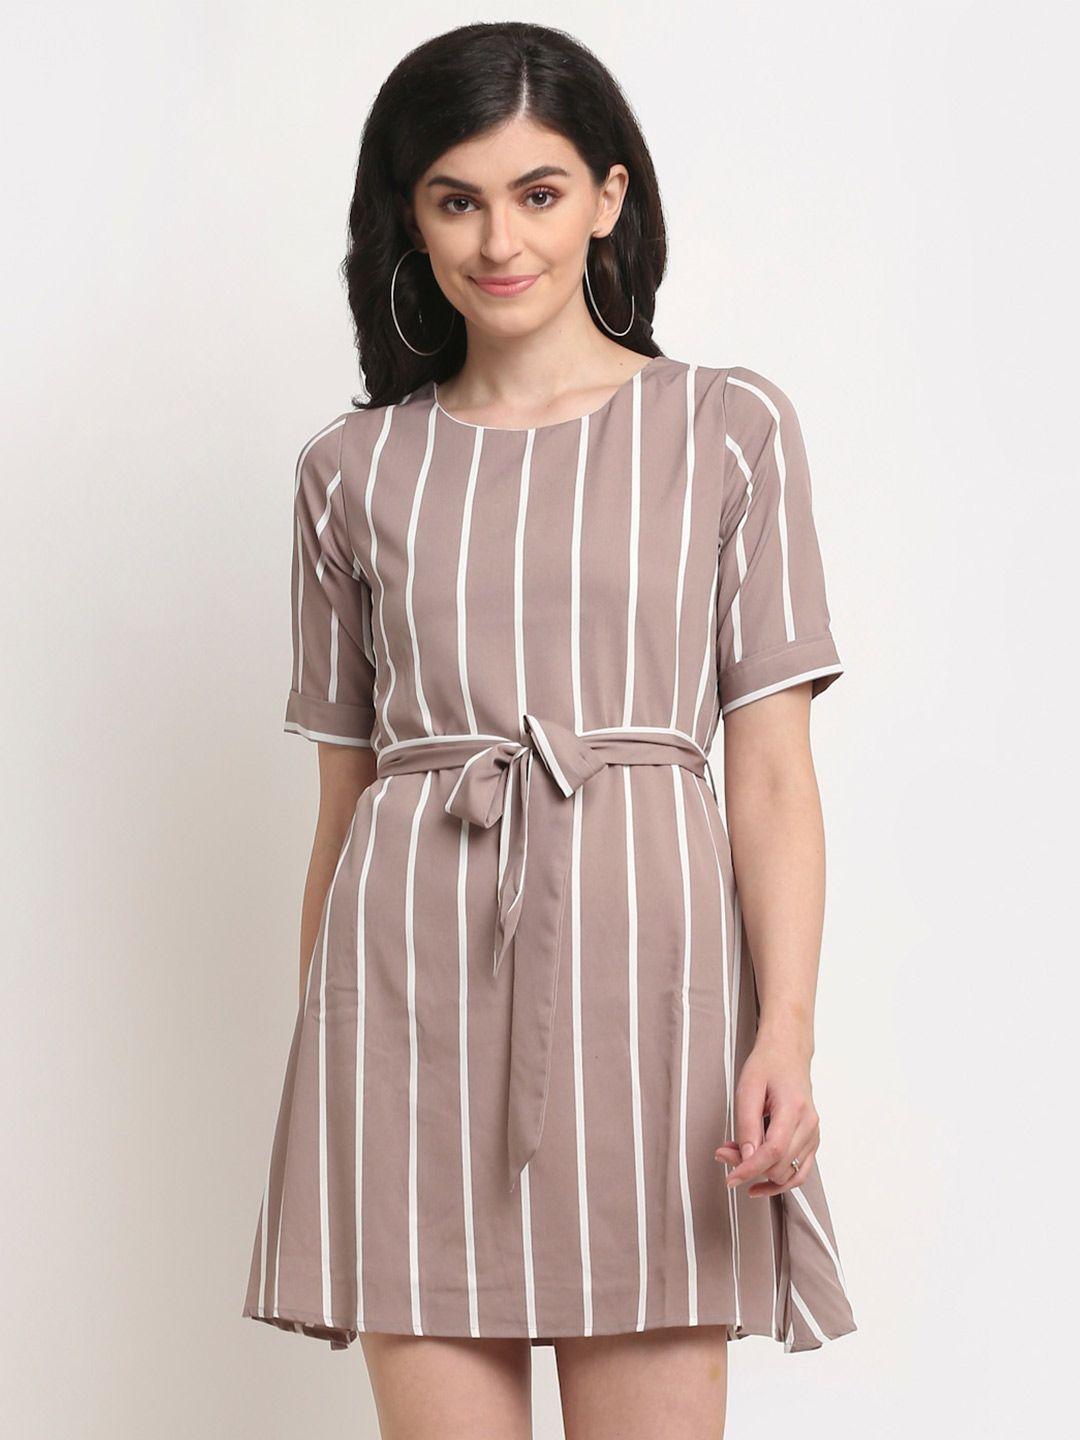 la zoire grey & white striped crepe a-line dress